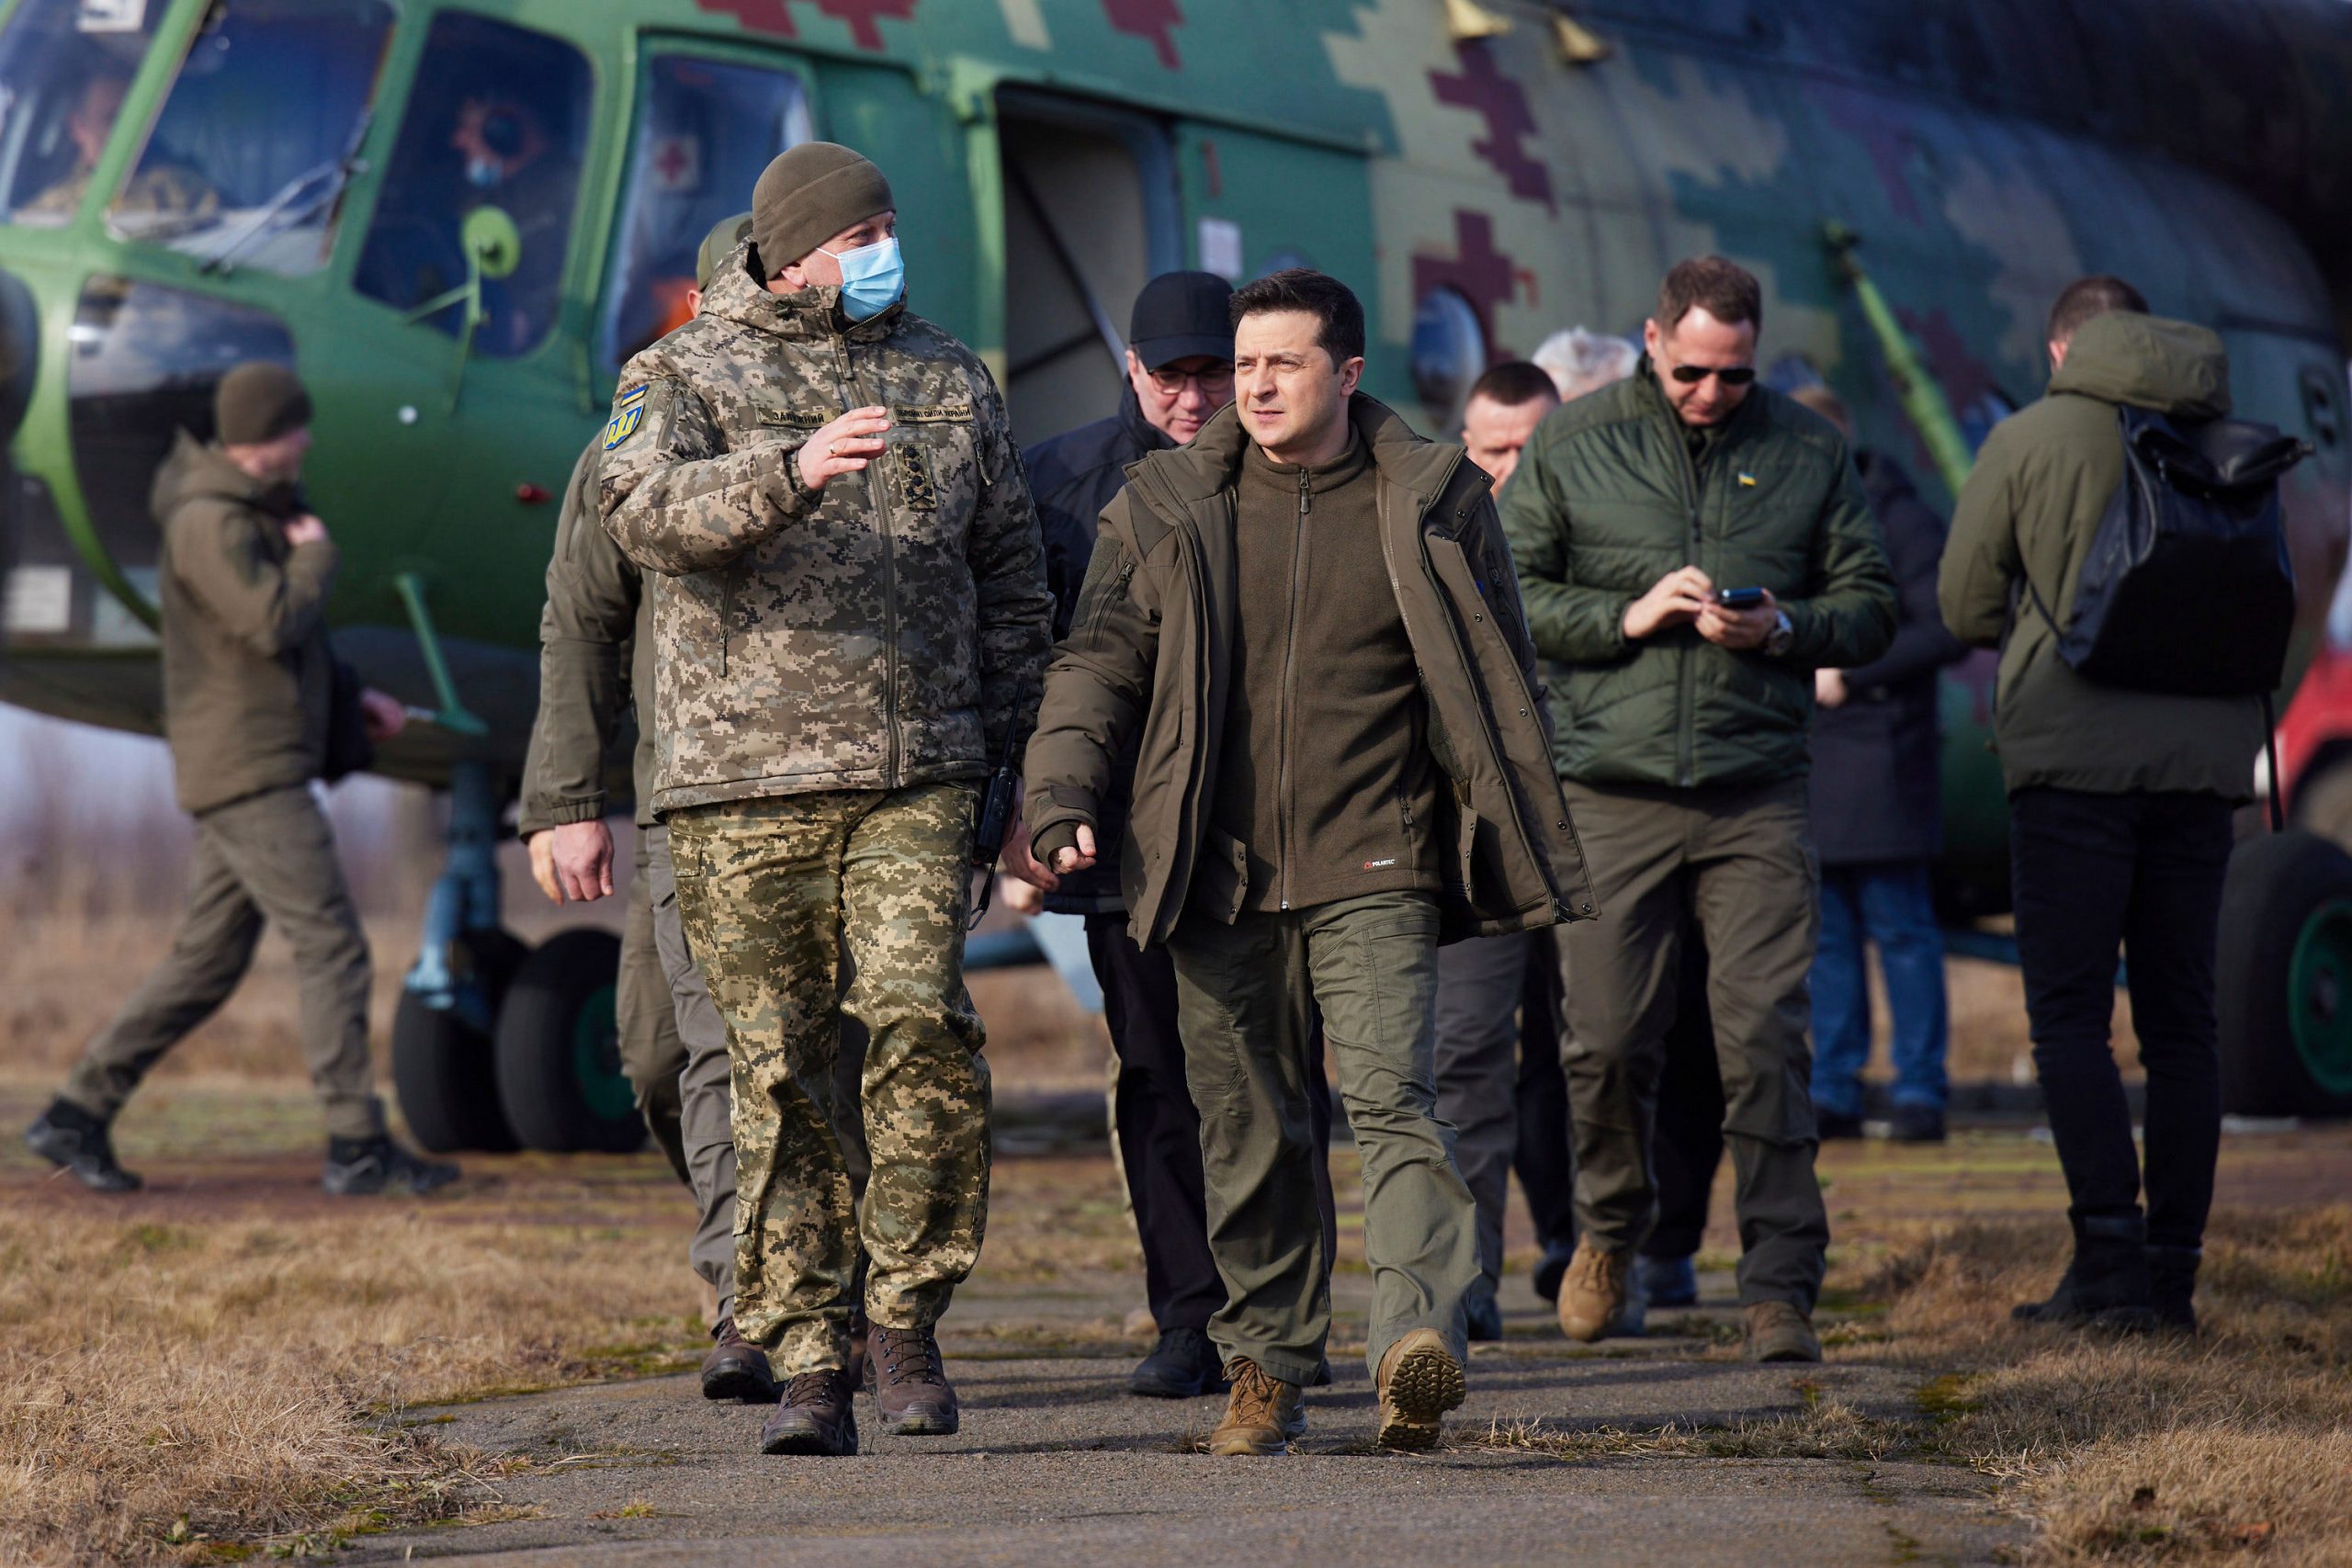 Russia adds troops near Ukraine despite drawdown claims: United States